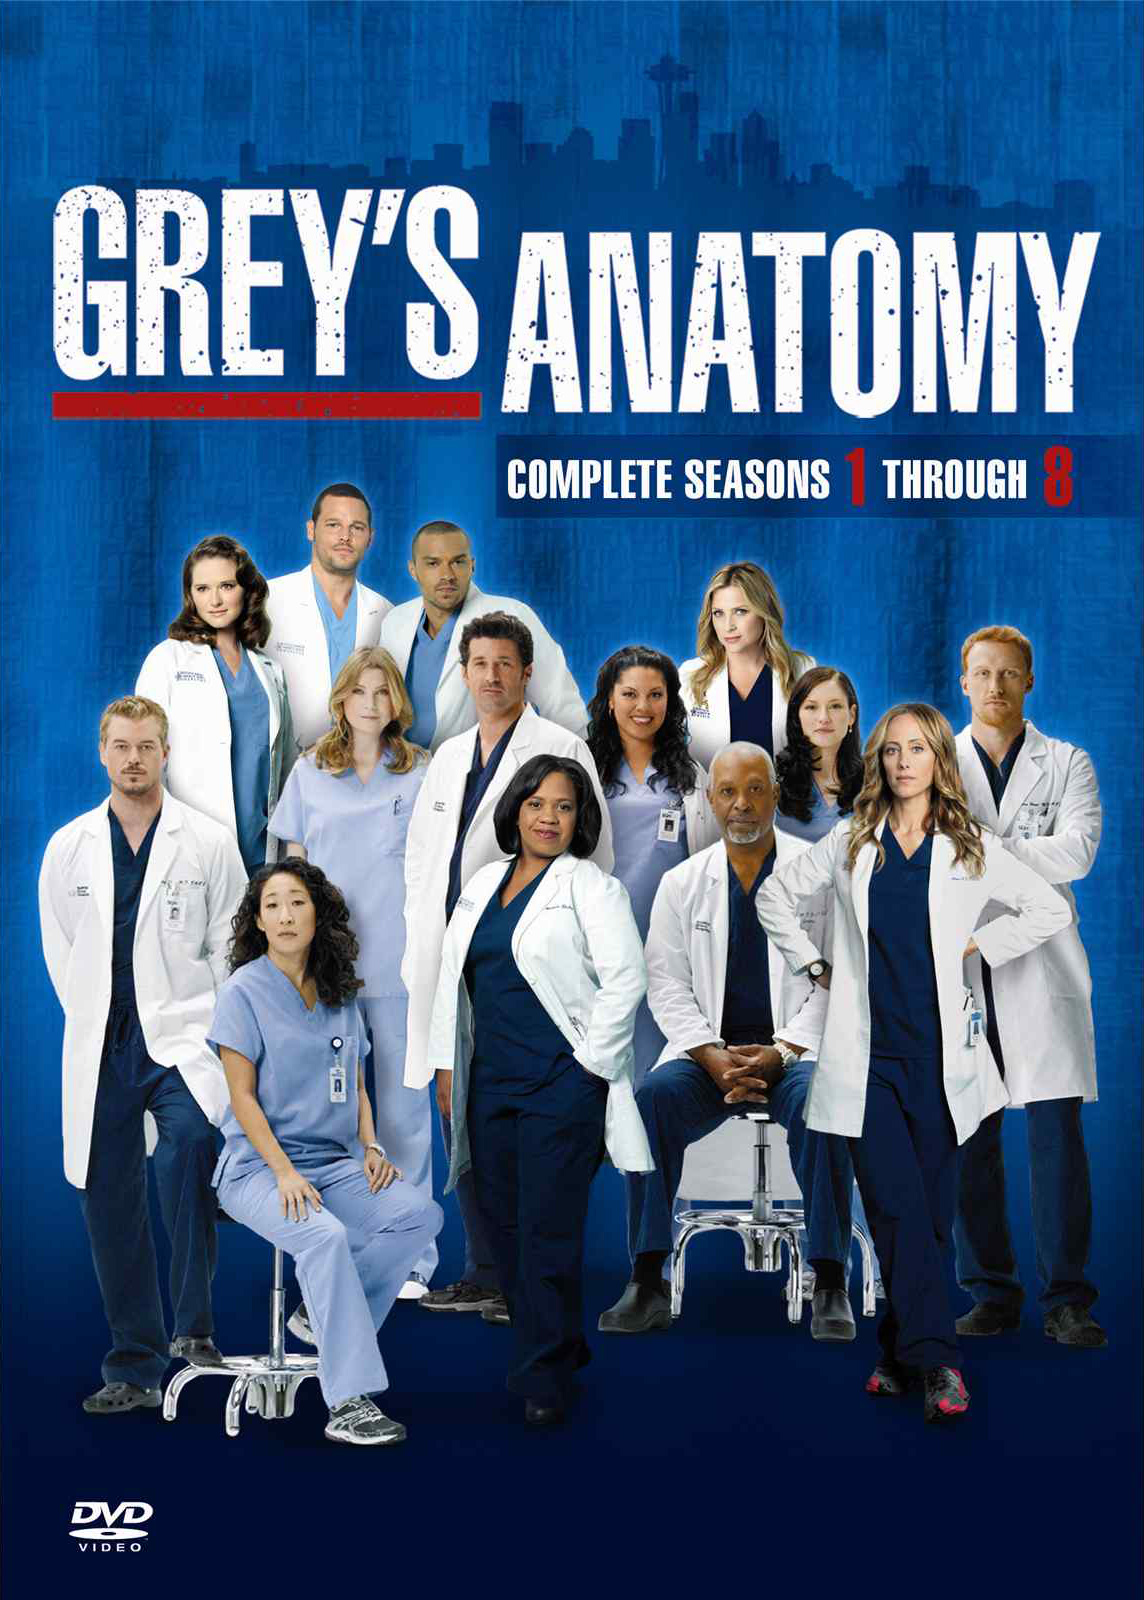 Grey's Anatomy (season 13)